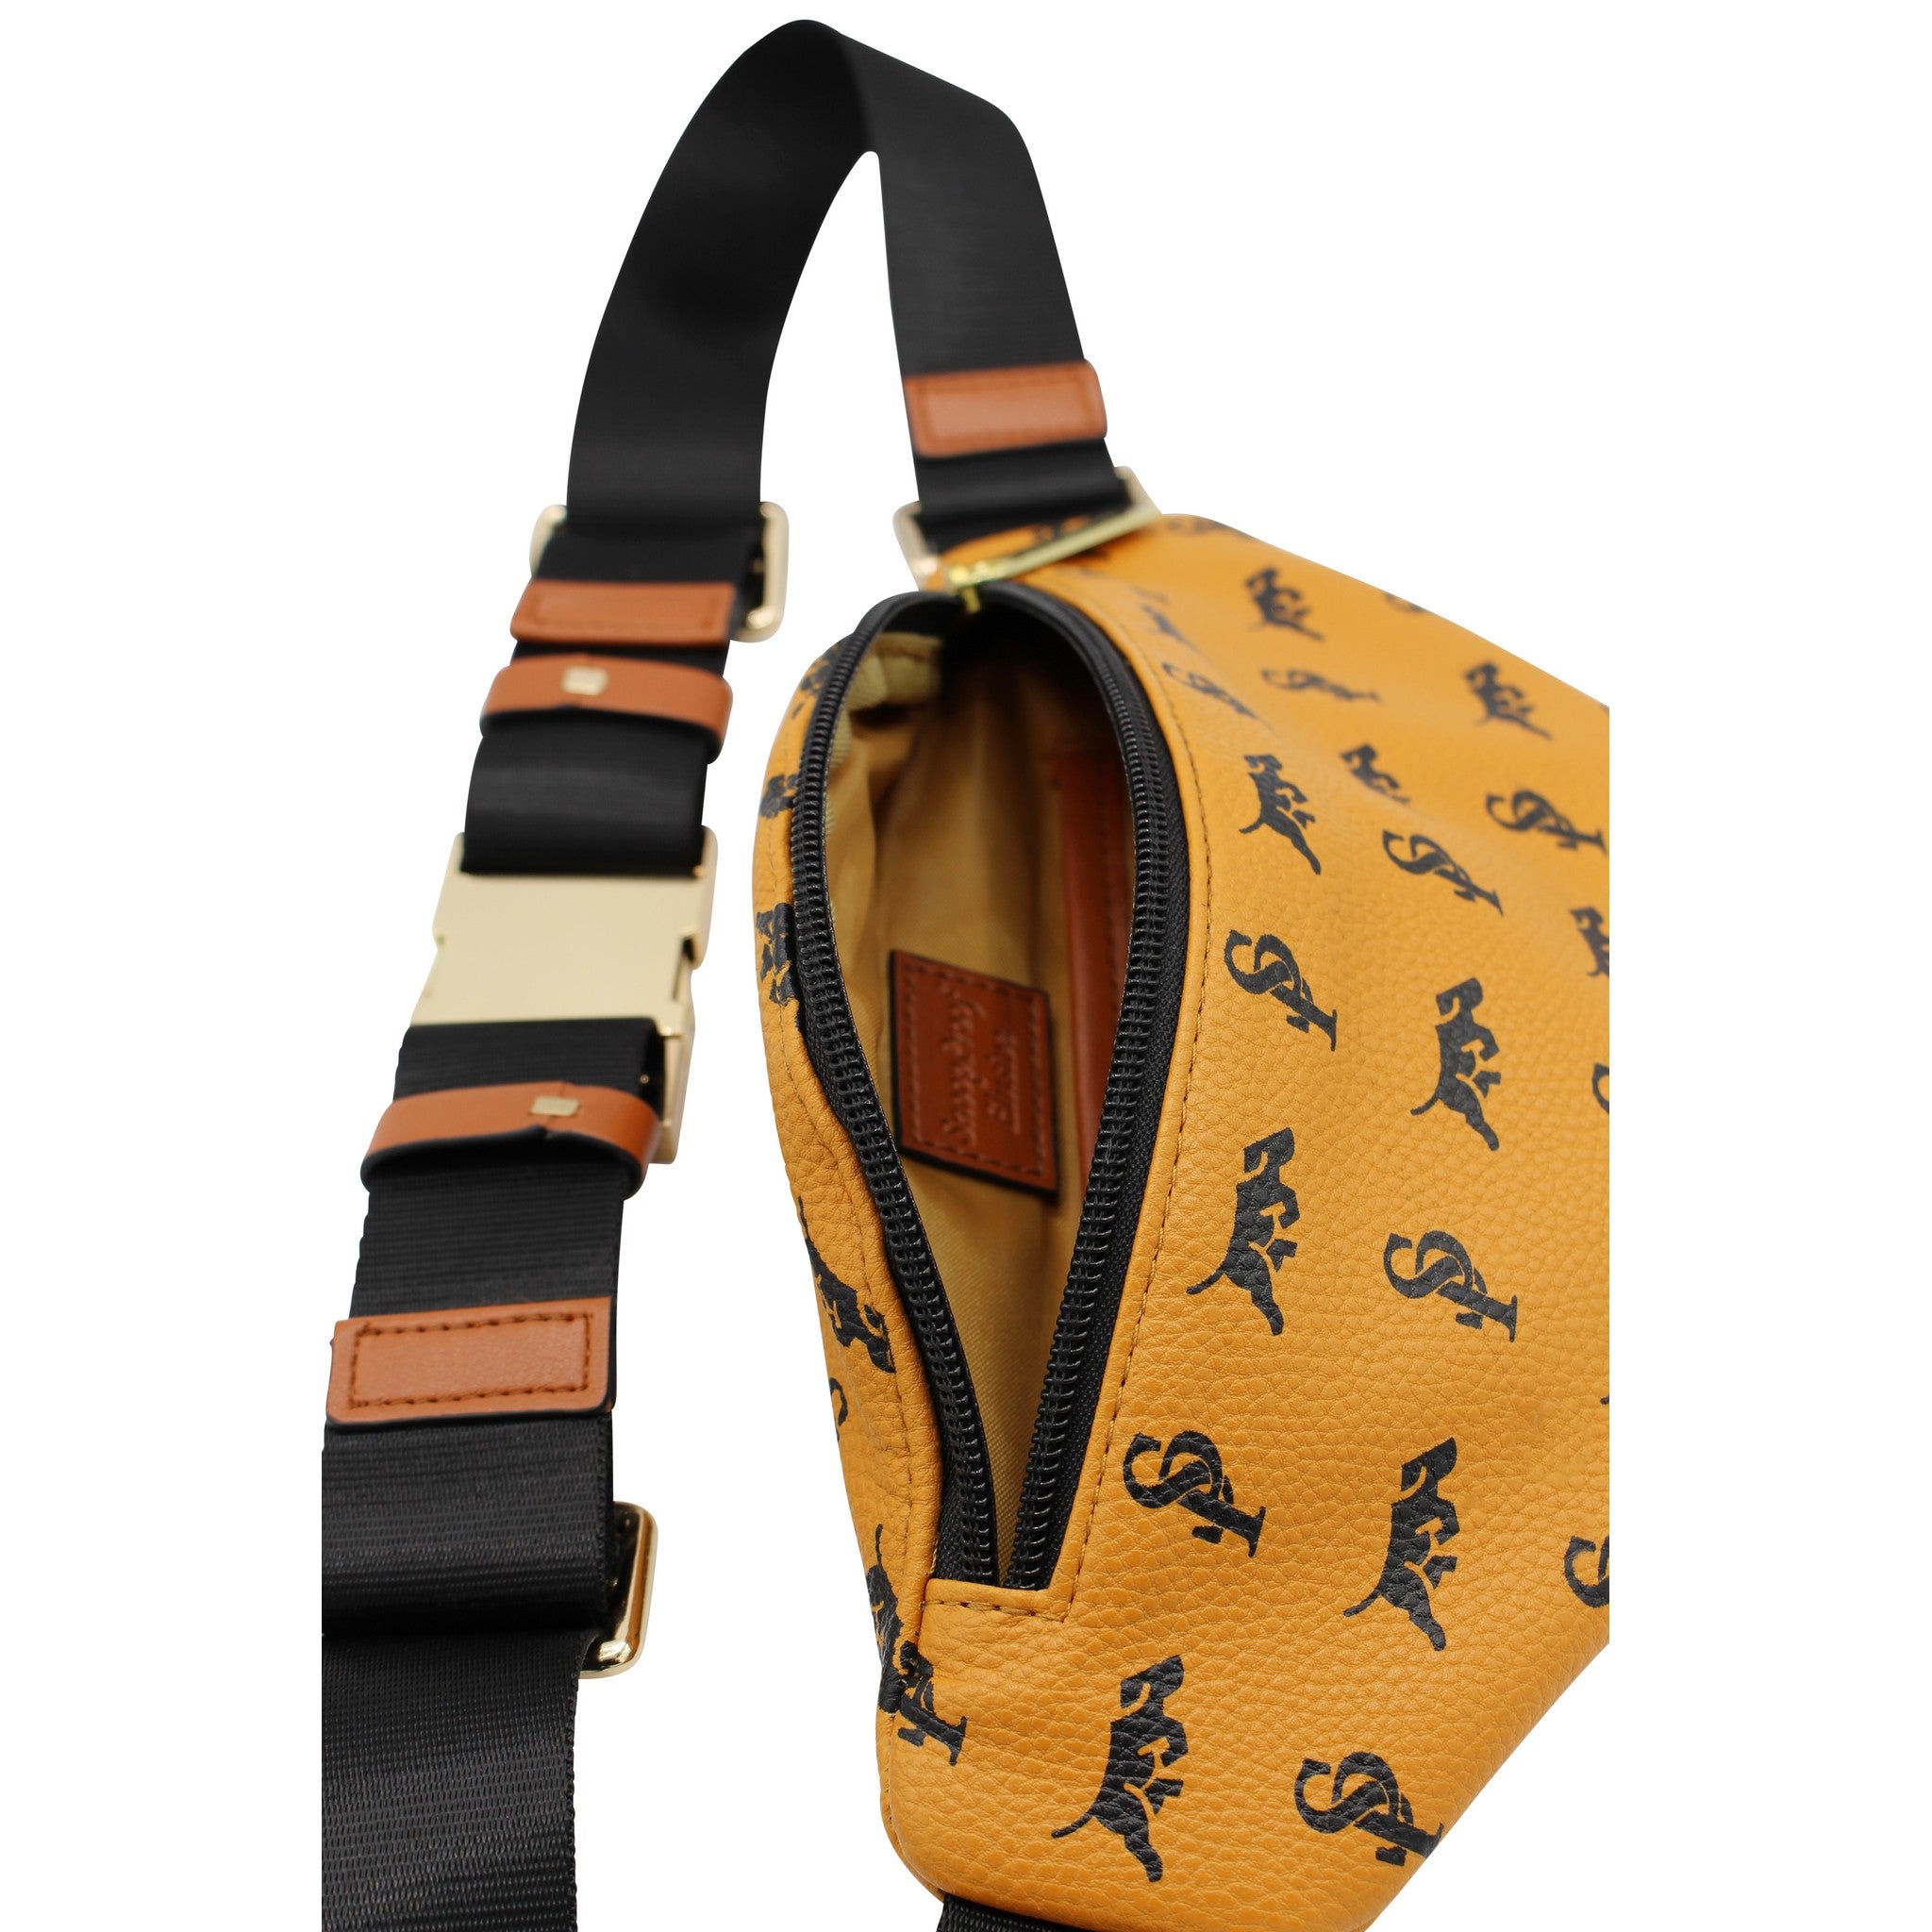 Elusive 2.0 in Tiger Orange - Smell Proof Belt Bag-Fanny Pack-Snoopproofbags